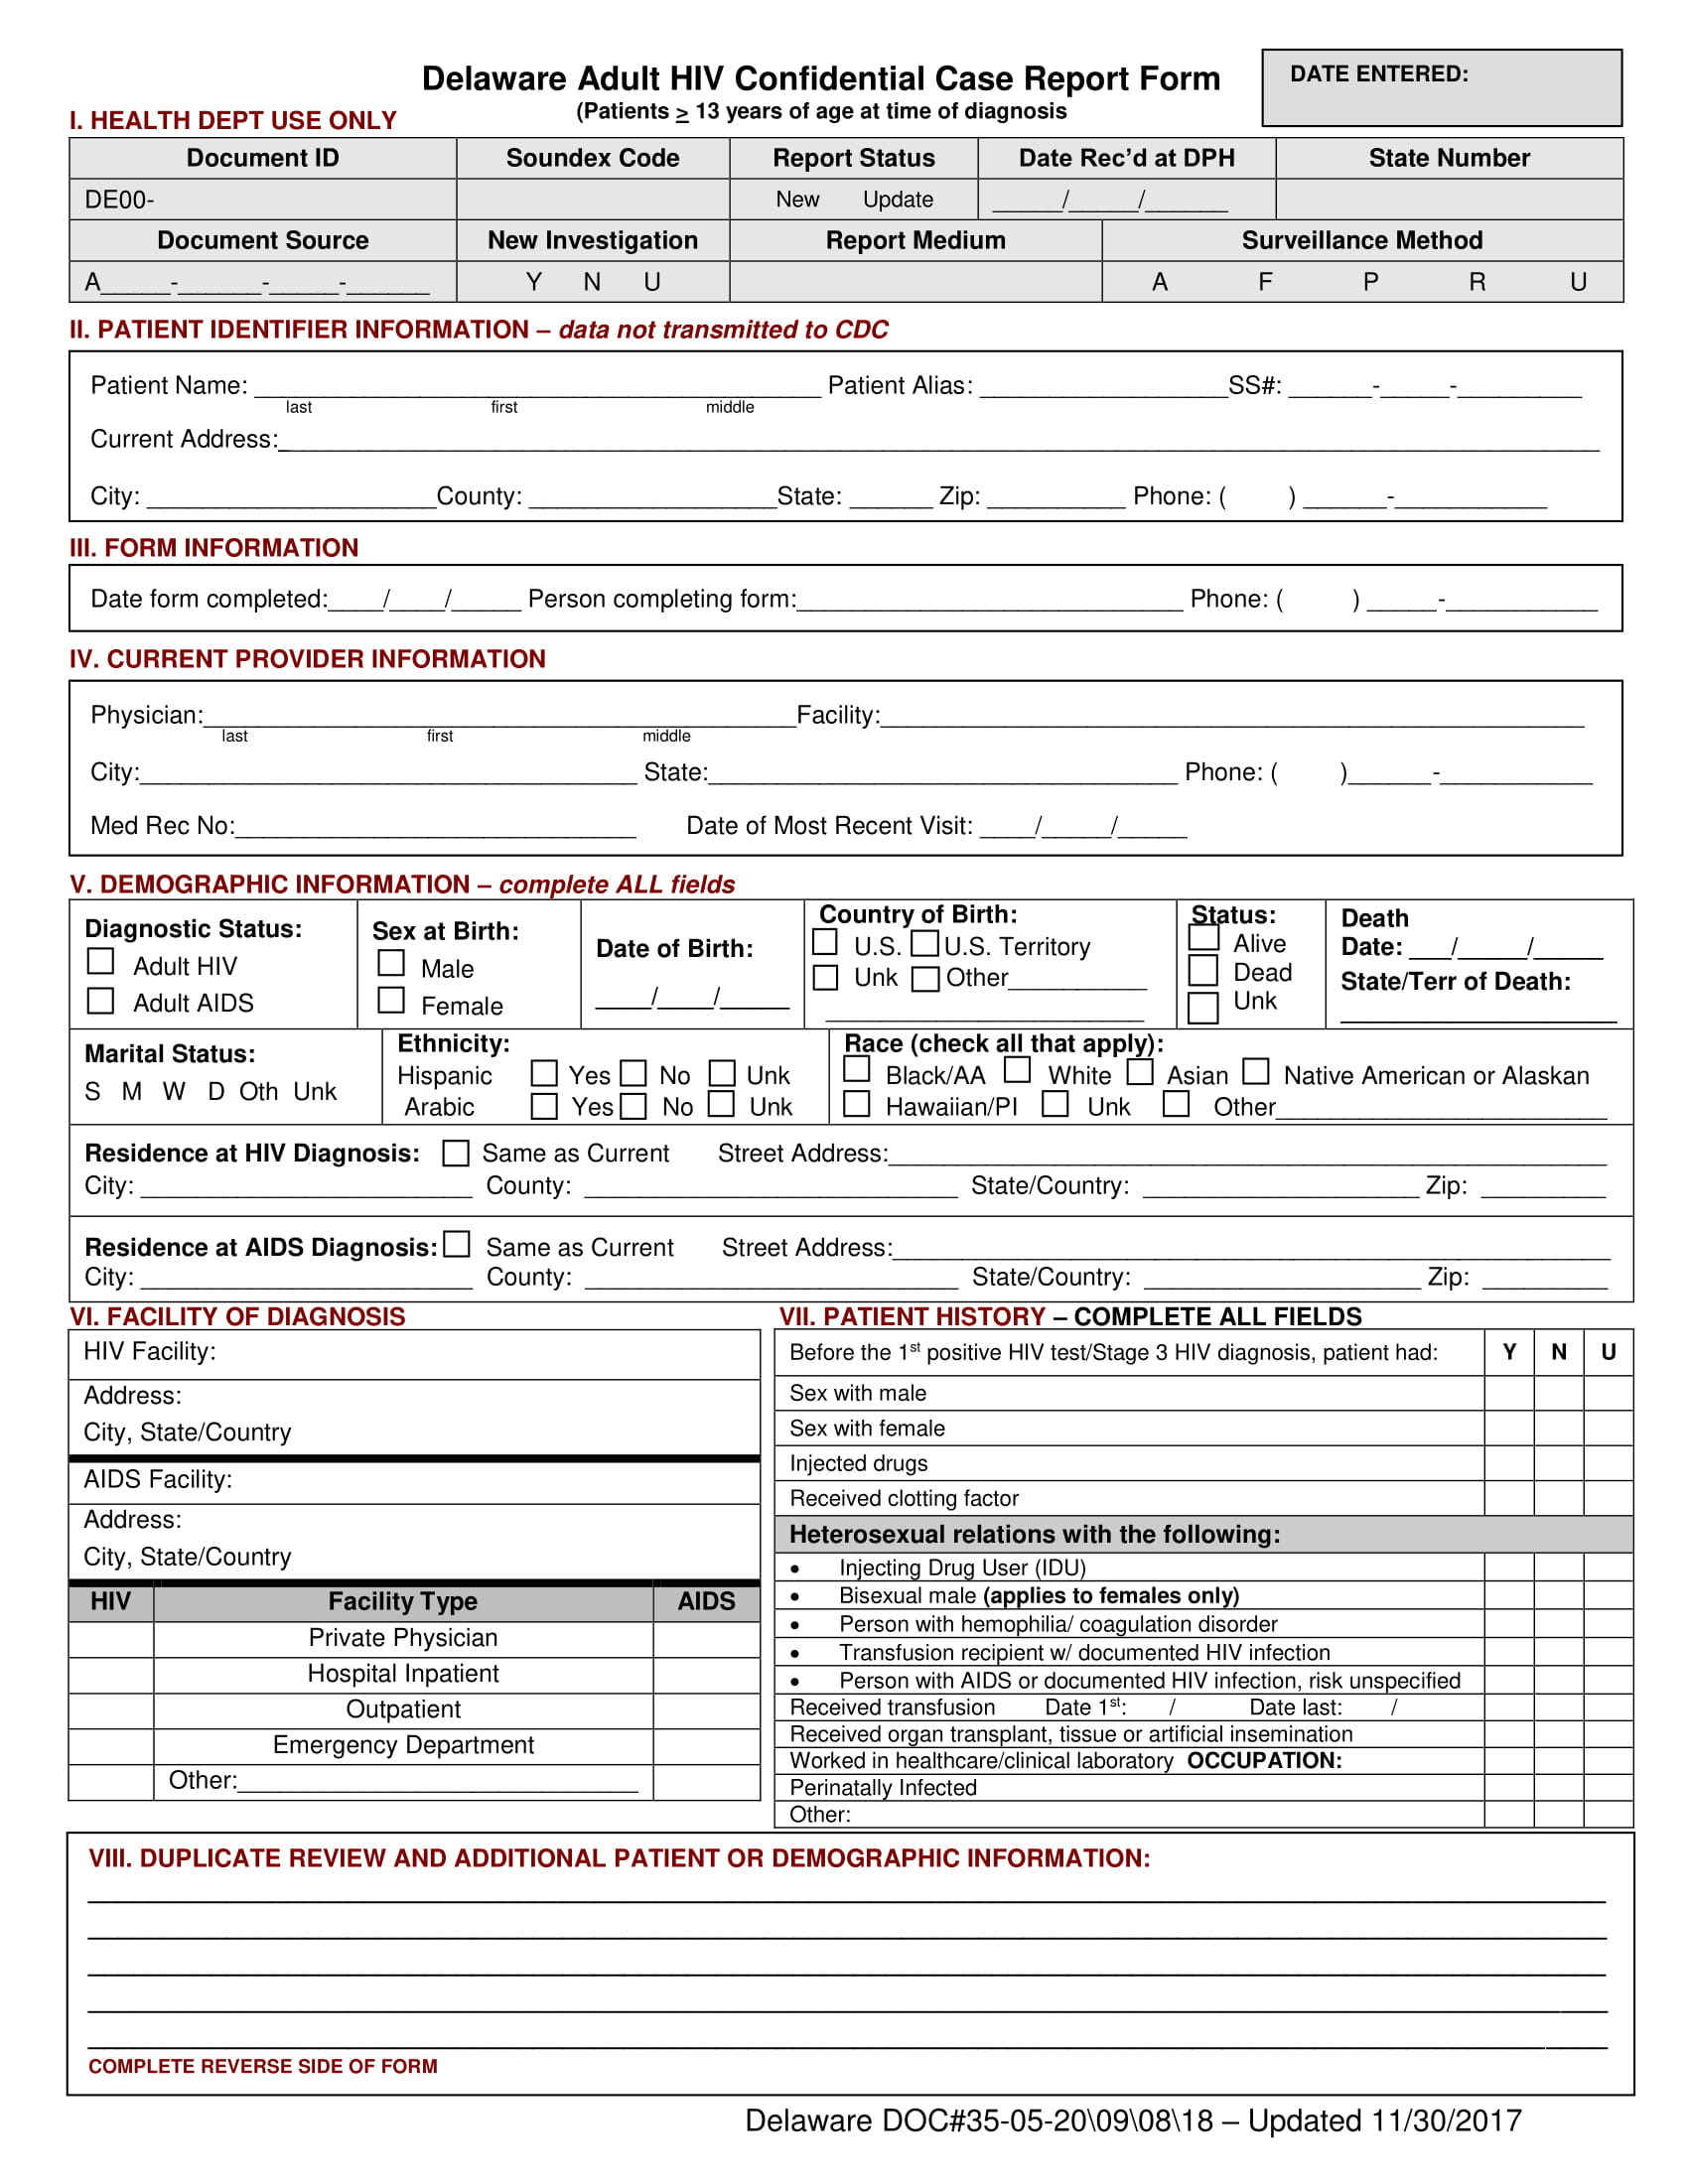 confidential case report form in pdf 1